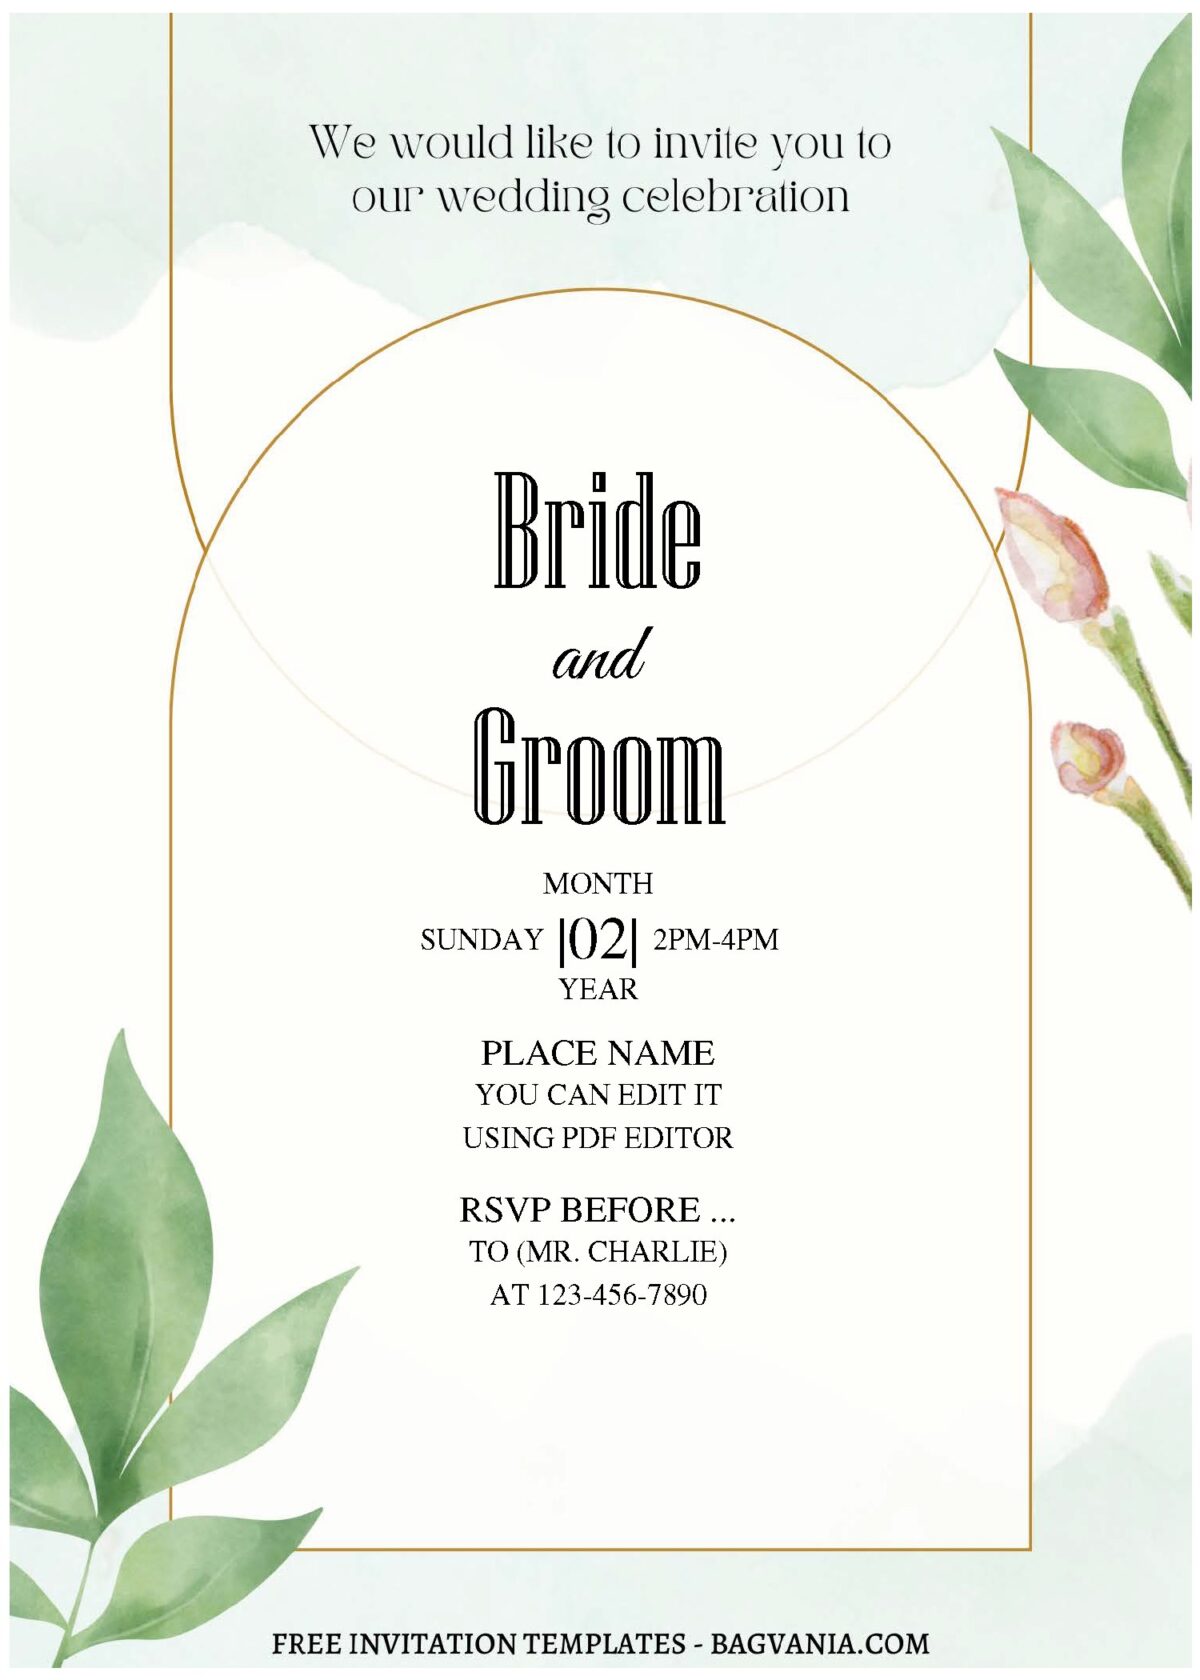 (Free Editable PDF) Modern Glam Greenery Wedding Invitation Templates  with editable text